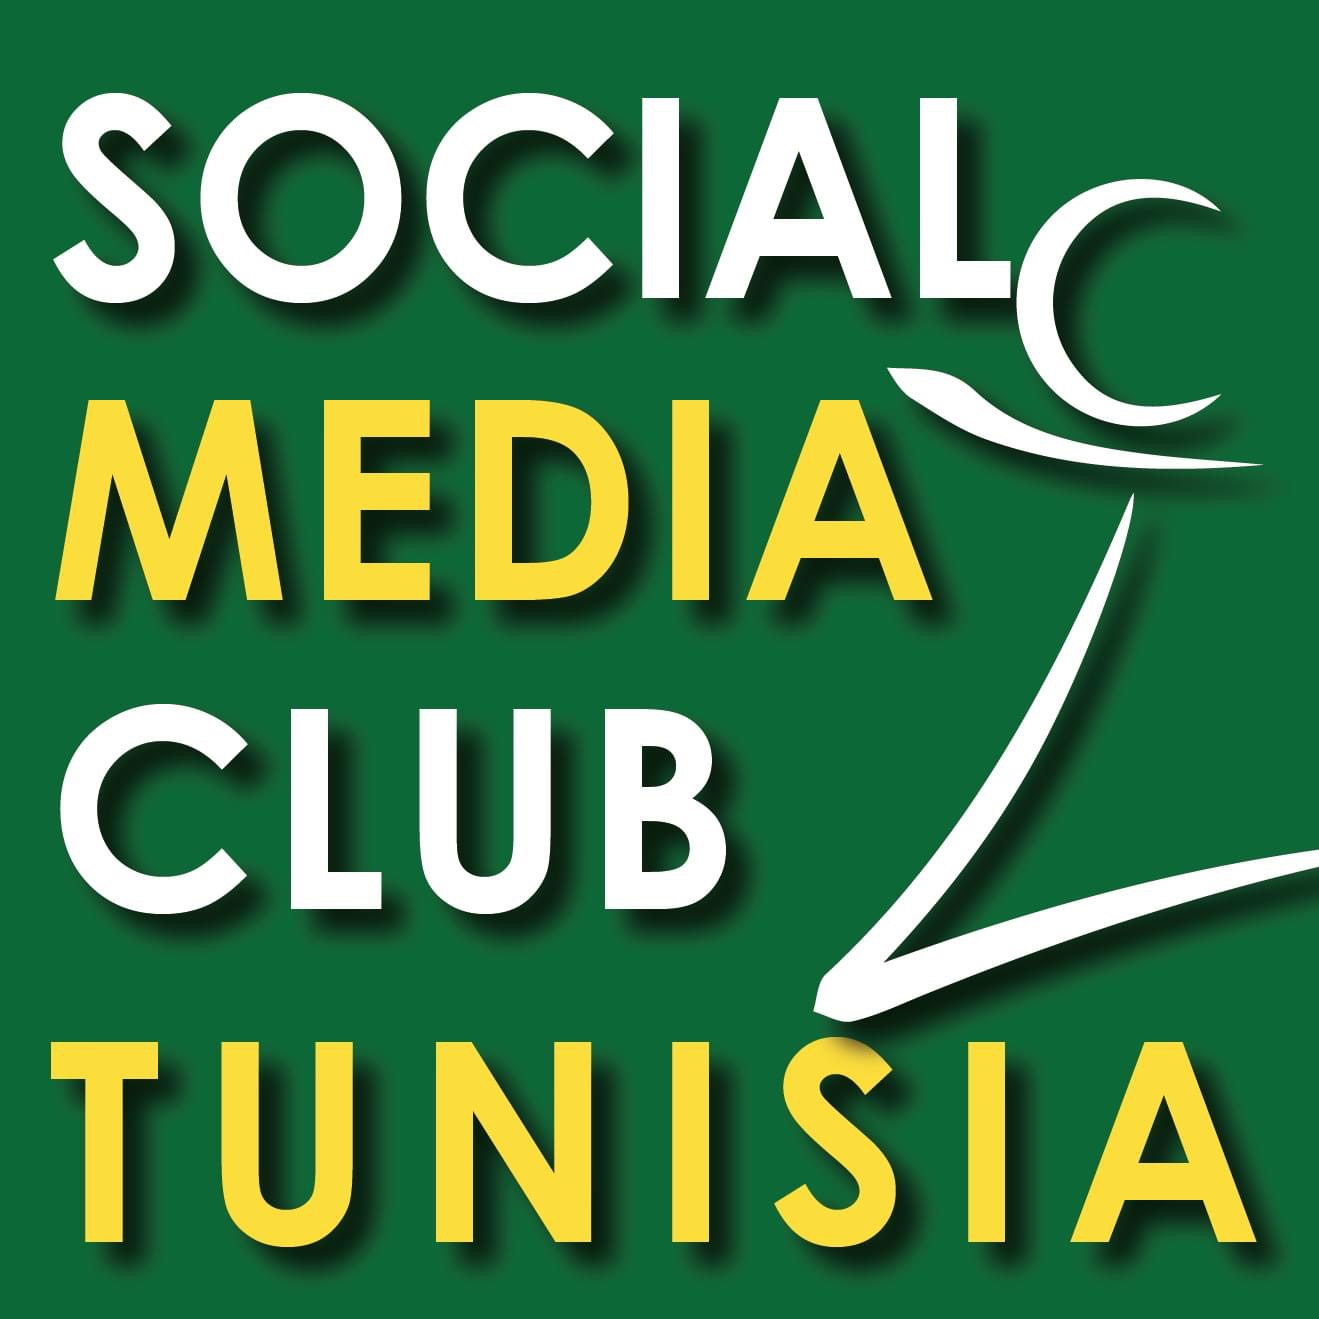 Social Media Club Tunisia 